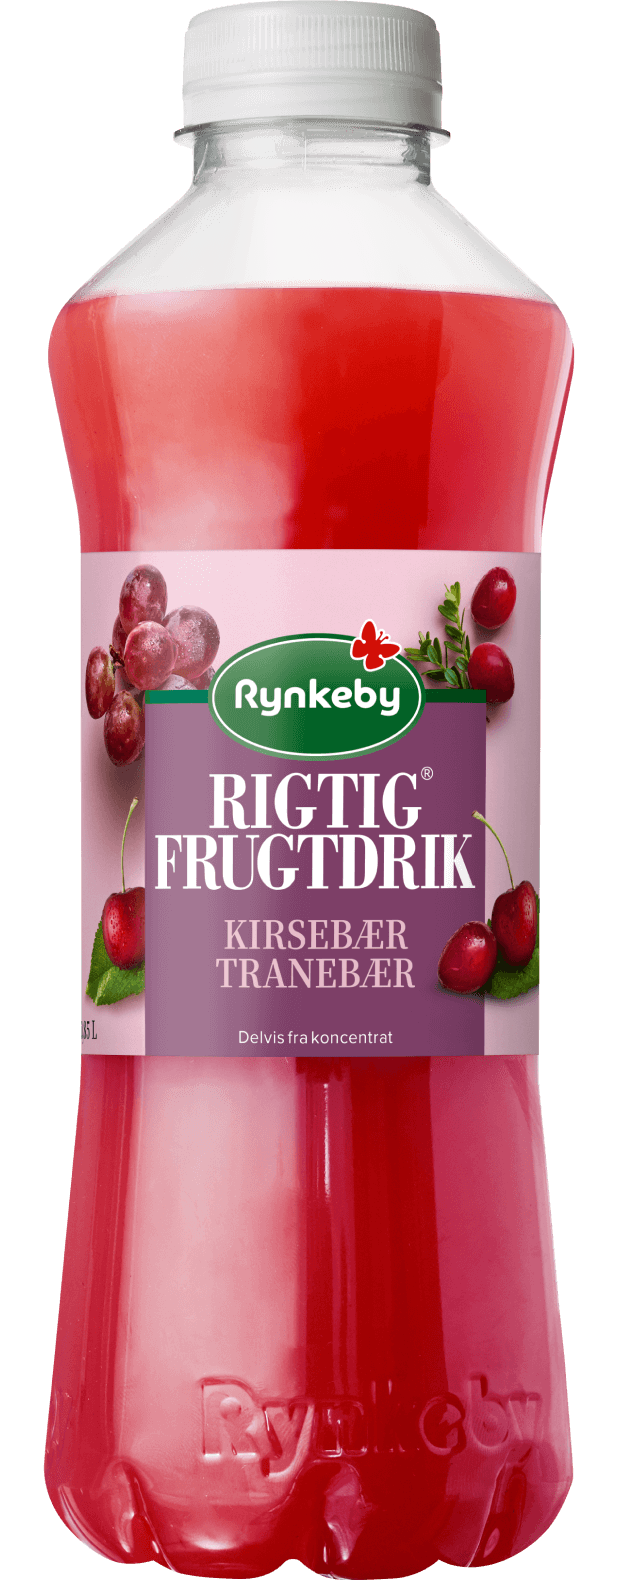 Frugtdrik Kirsebær-Tranebær